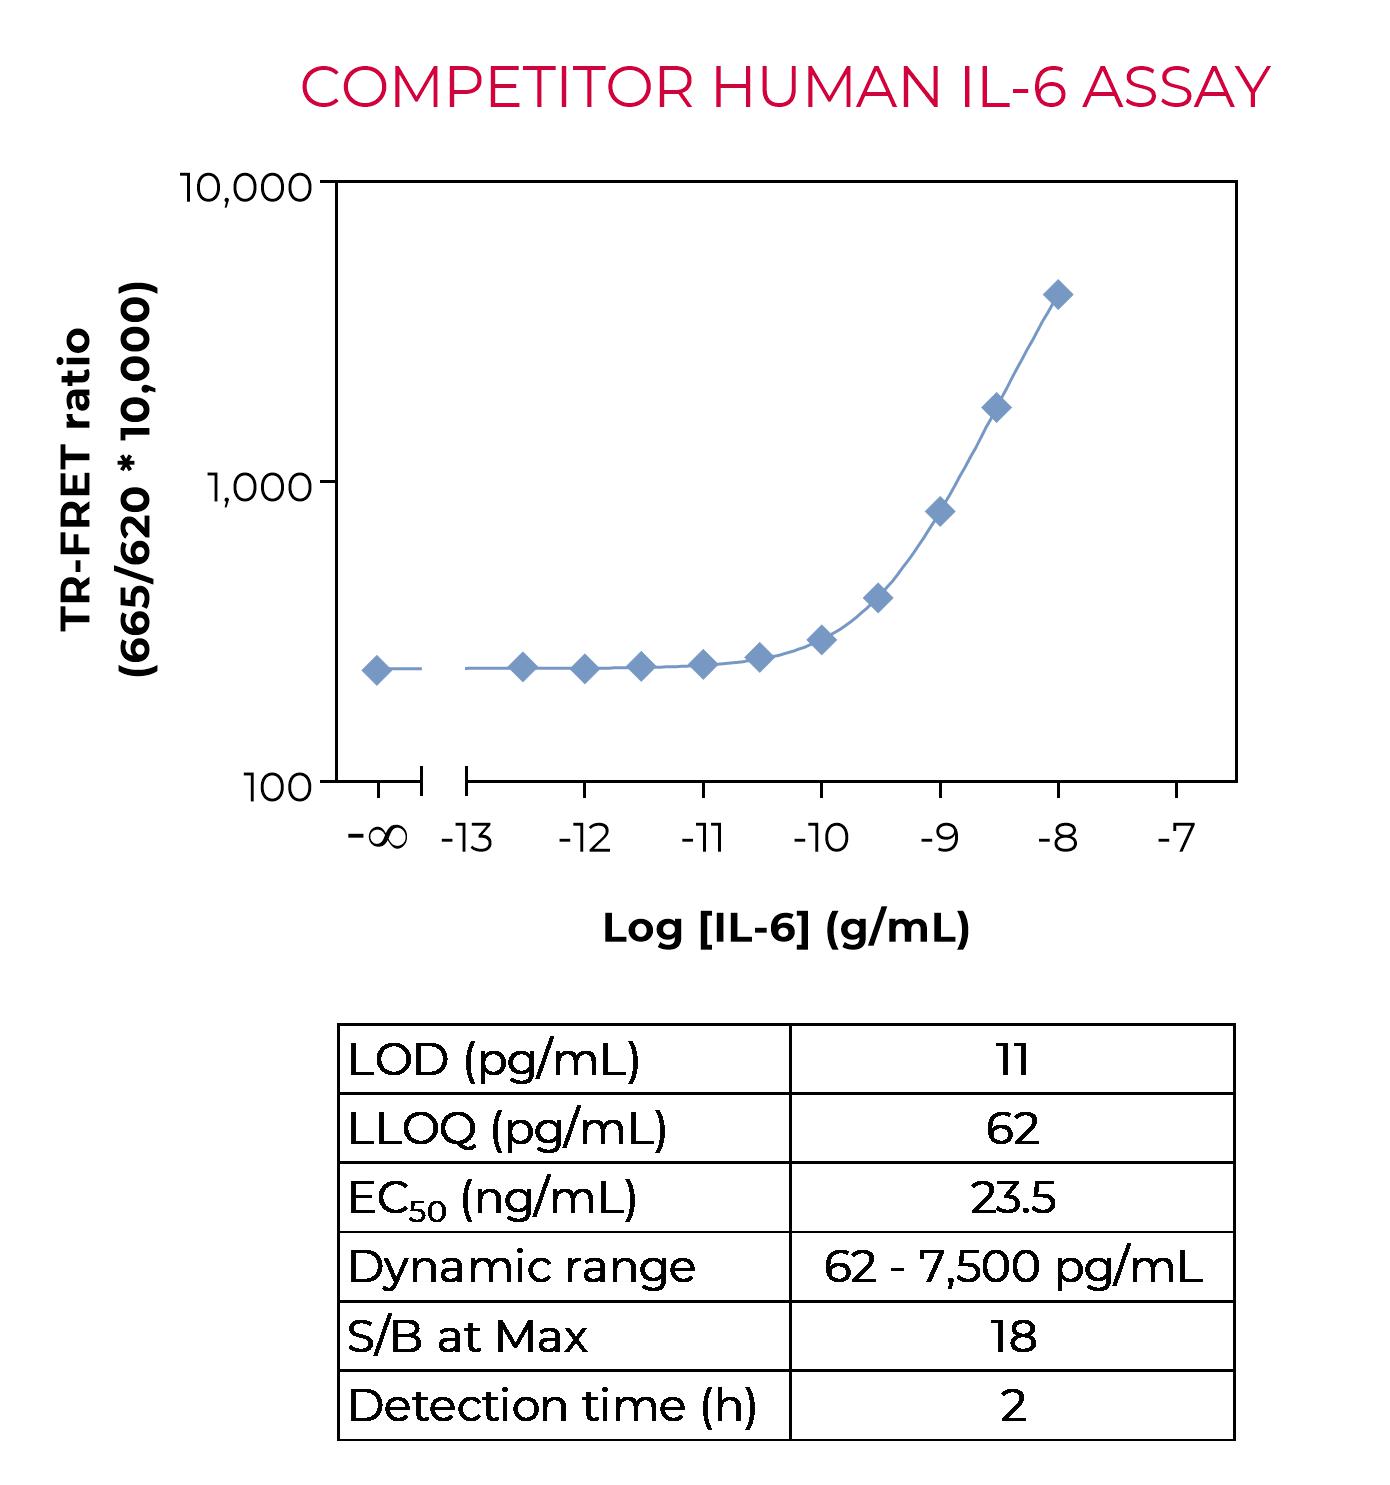 Competitor Human IL-6 standard curve